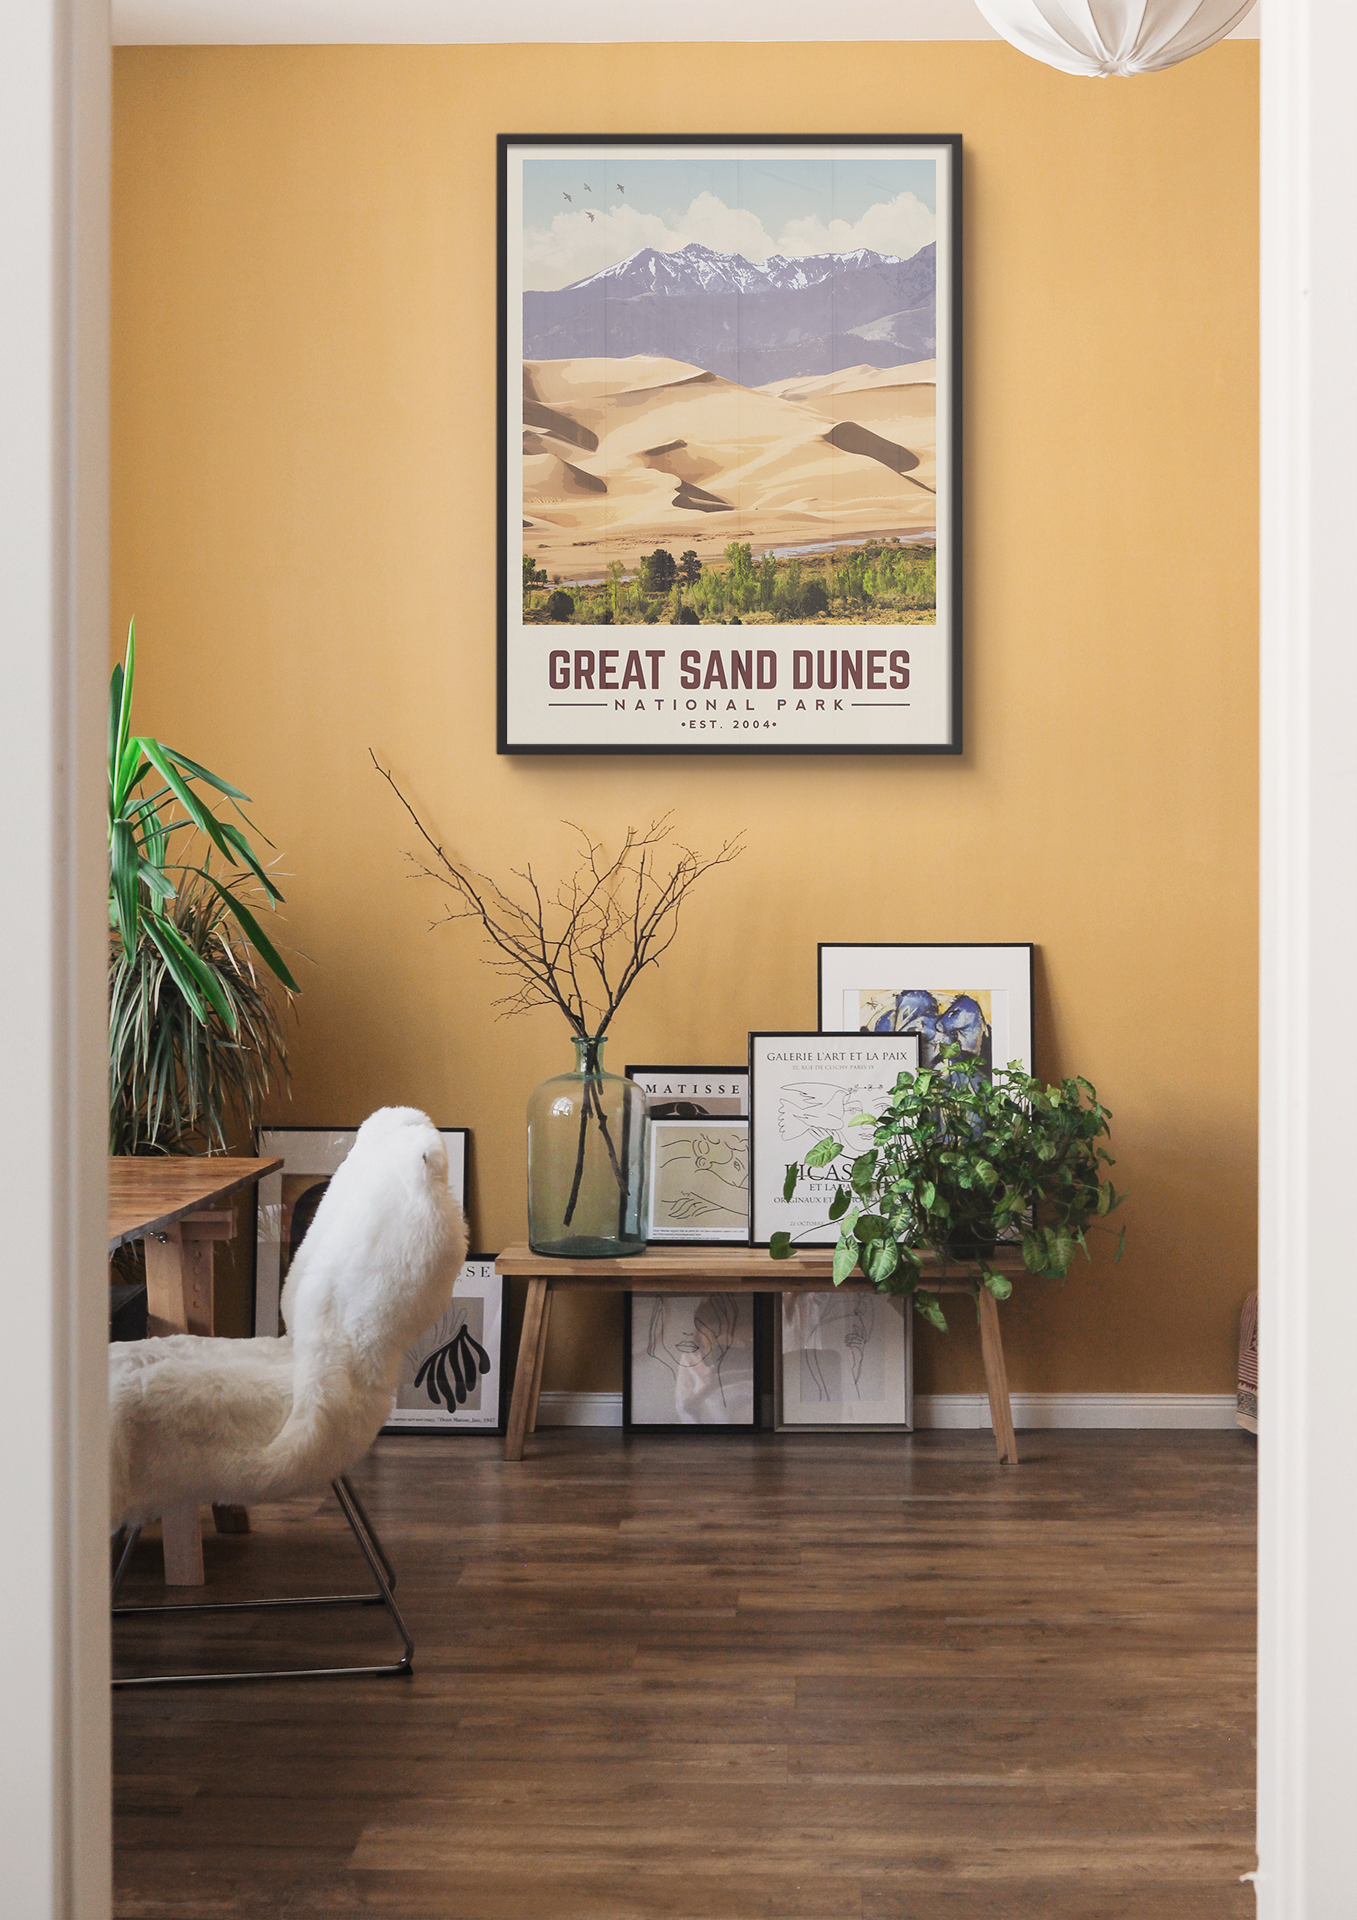 Great Sand Dunes National Park - Minimalist Travel Print